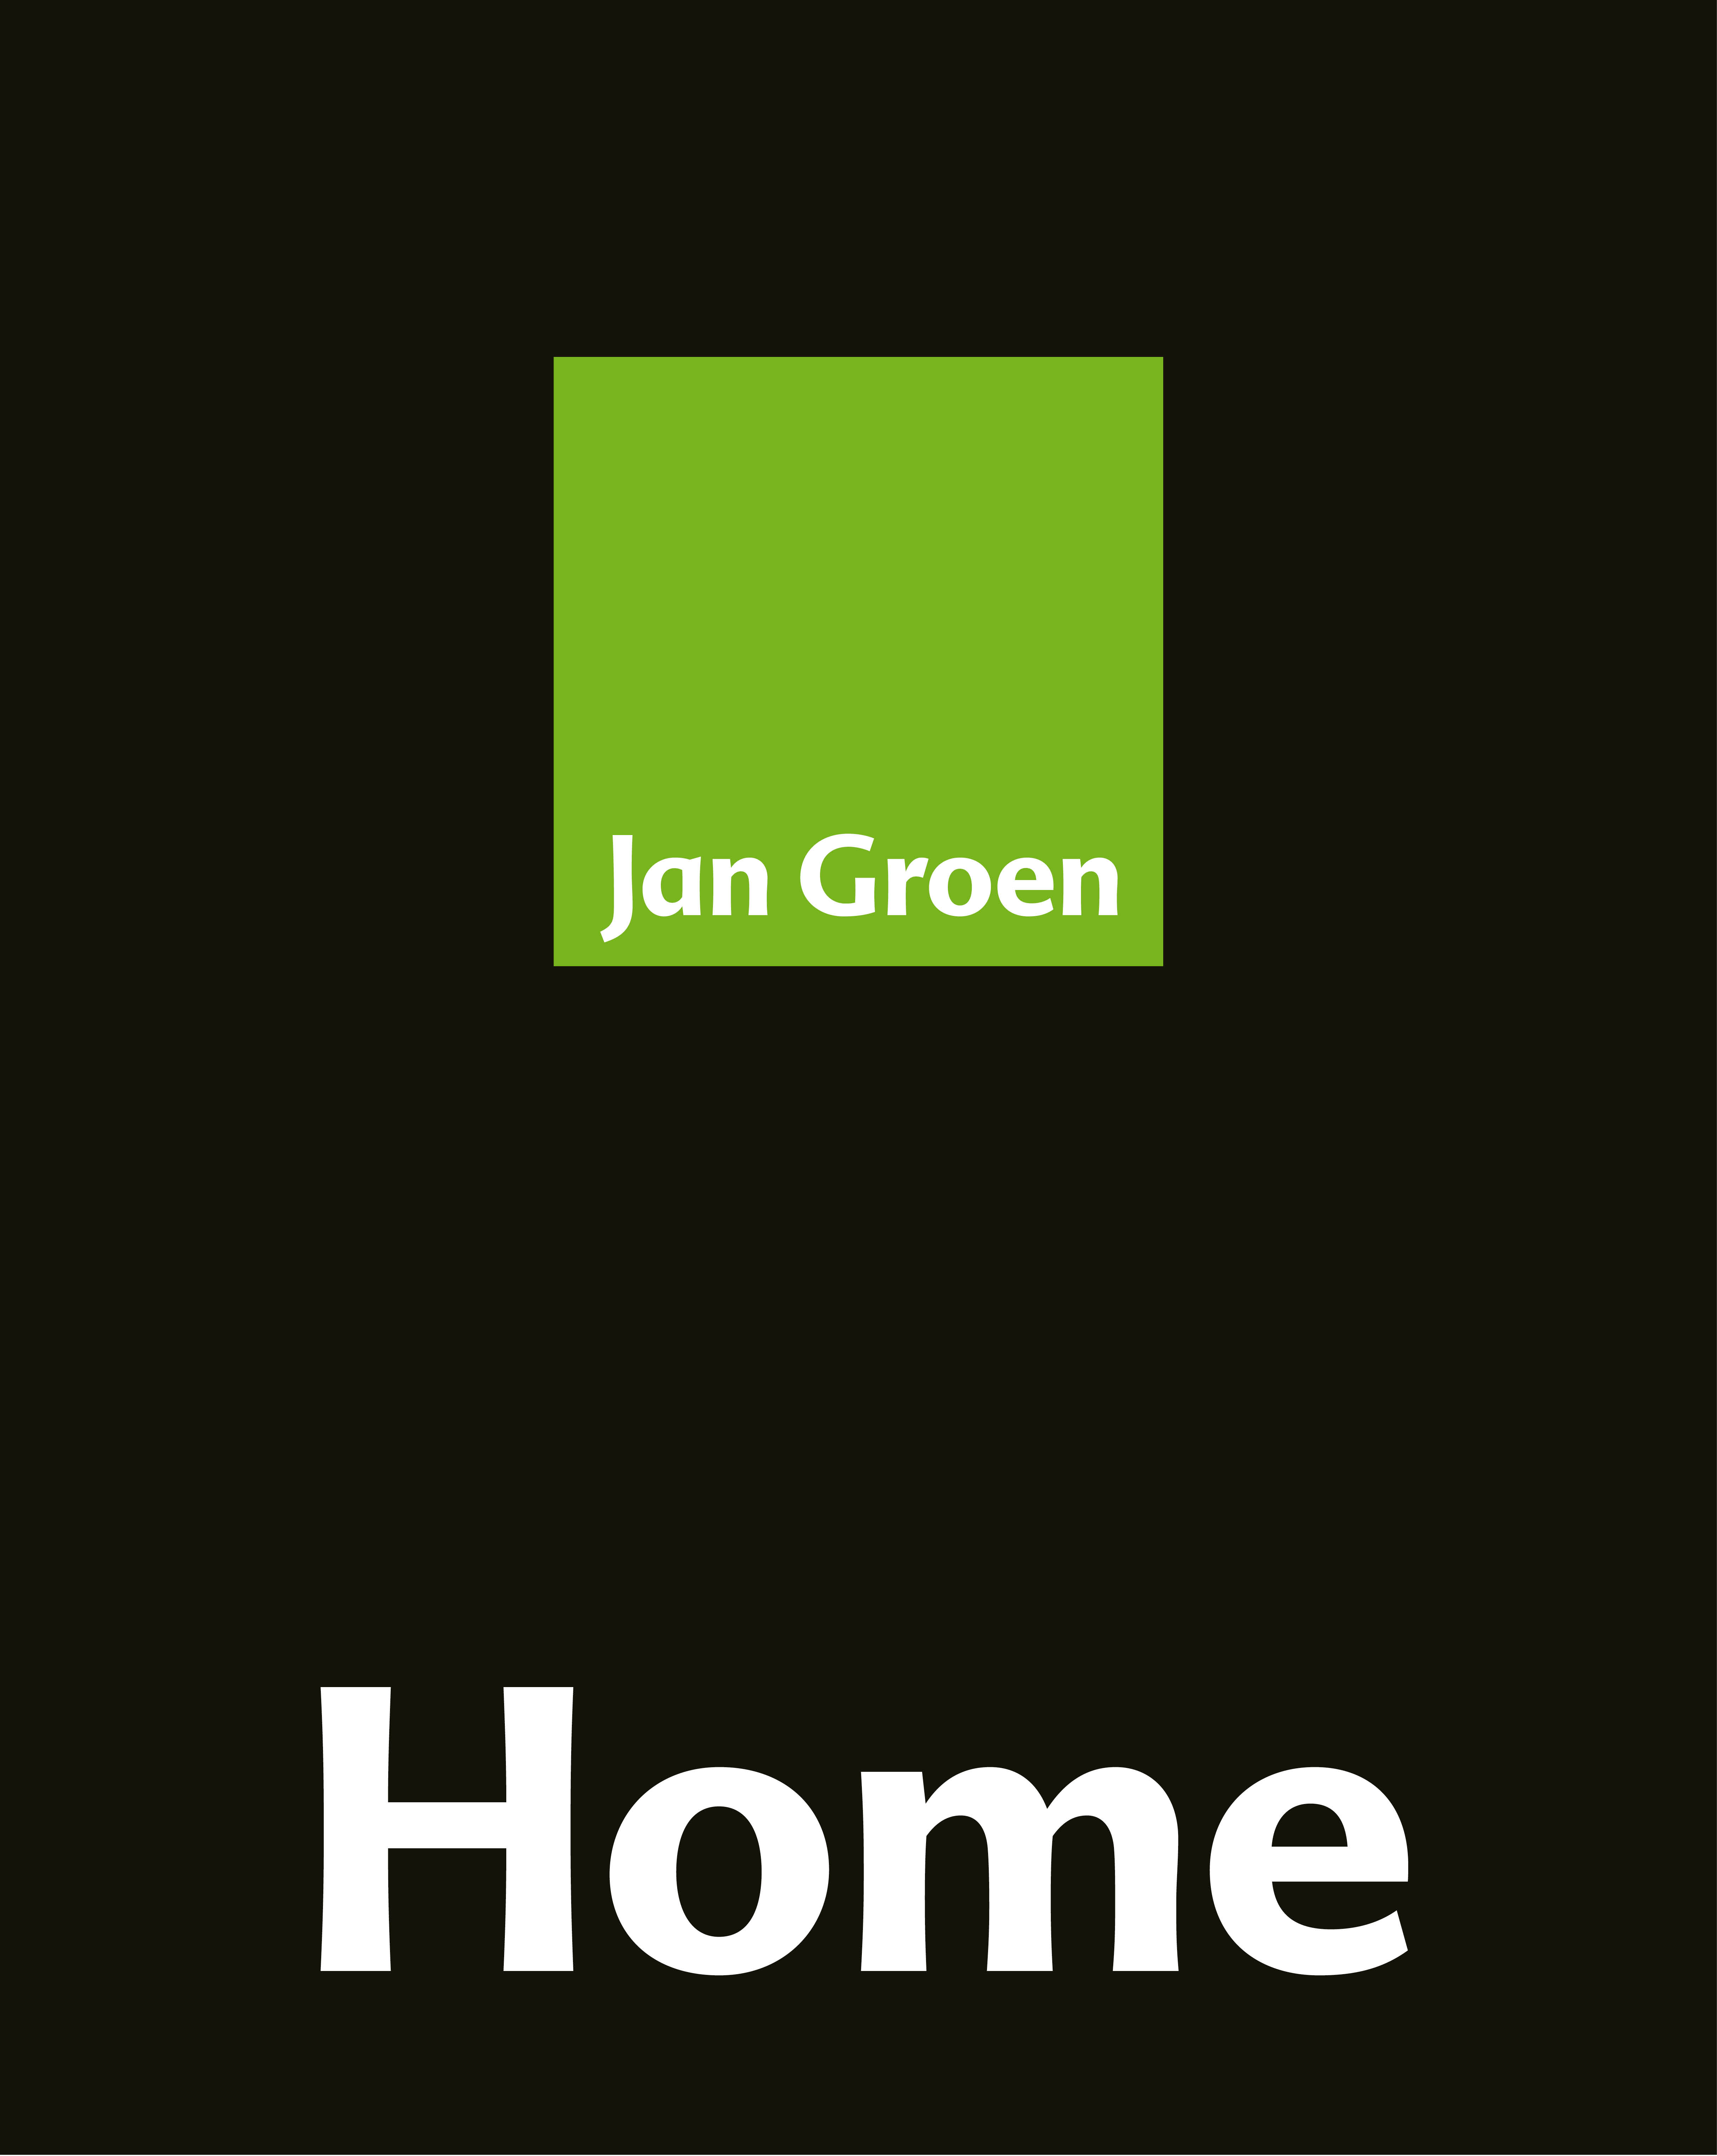 Jan Groen Home